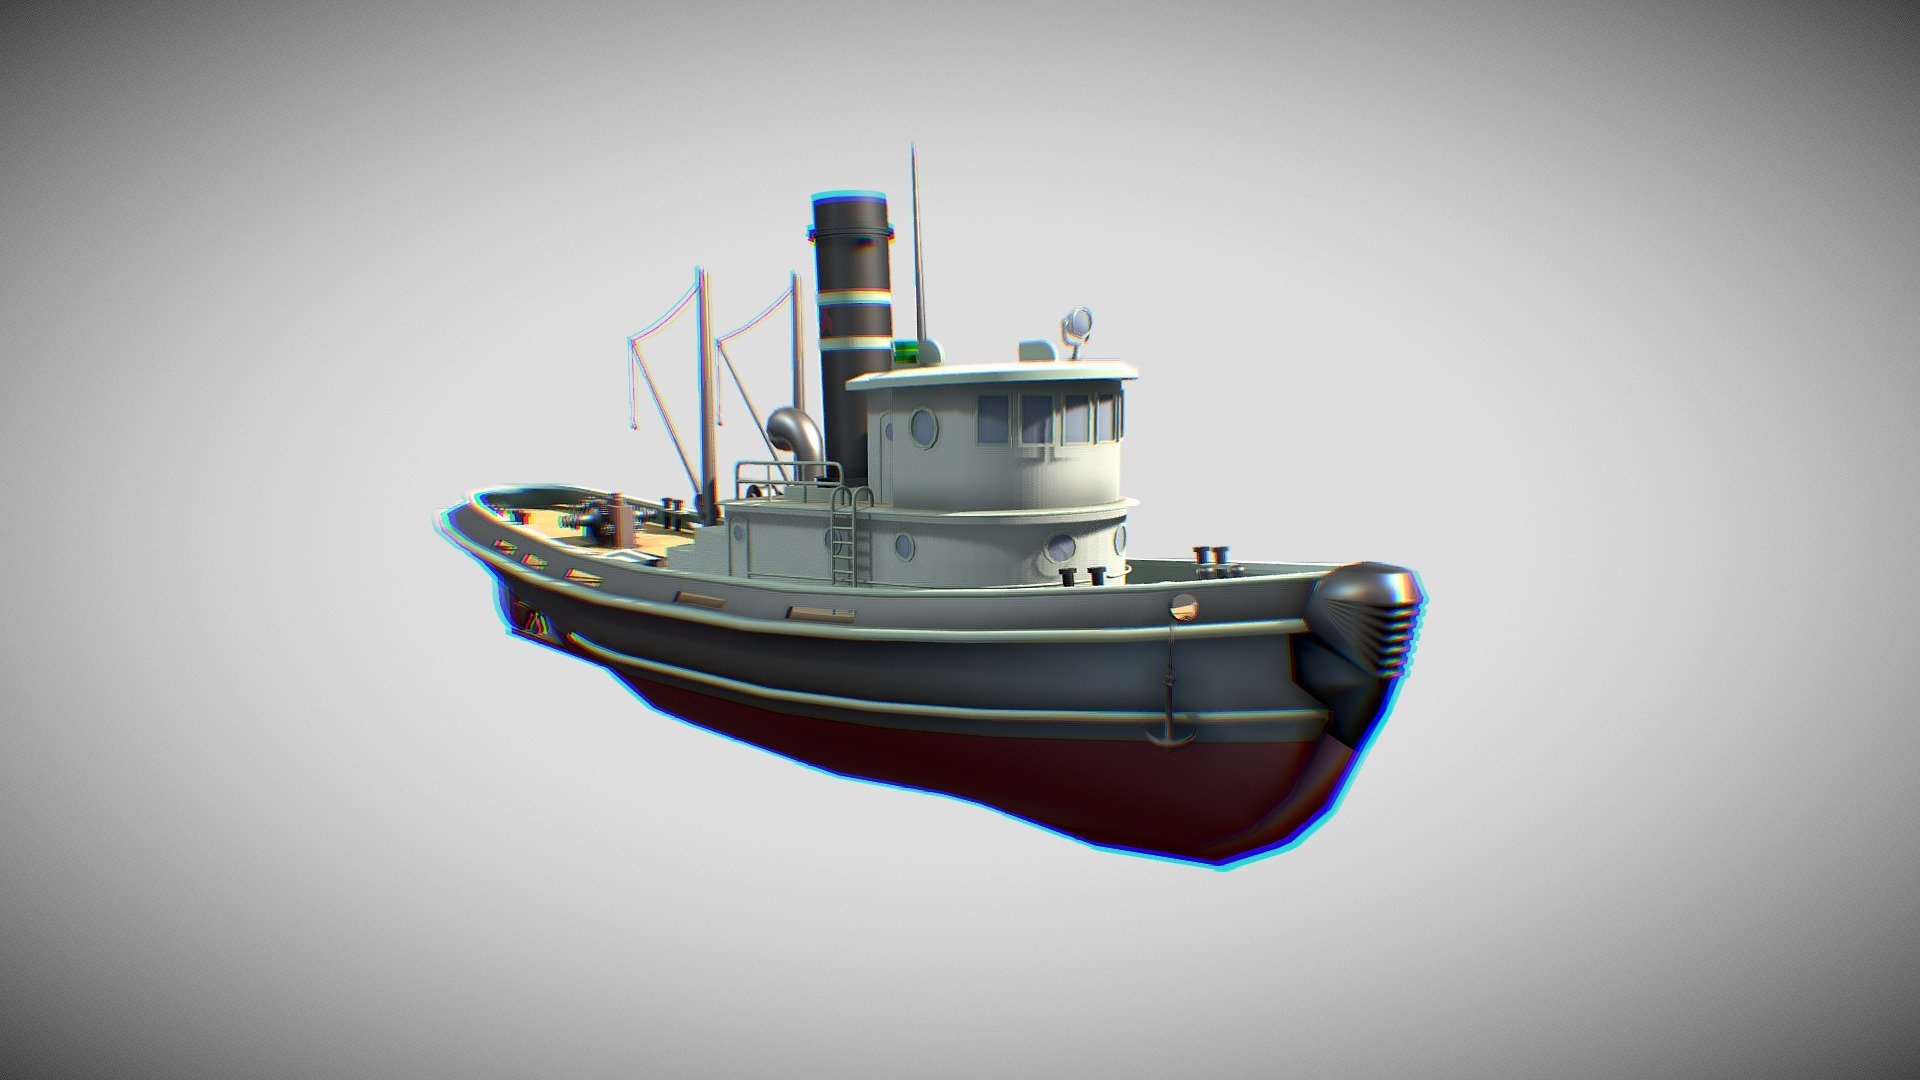 Fishing boat, oil tanker model, film and television animation model, - Fishing boats tanker ship model 3D model - Buy Royalty Free 3D model by mpc199075 3d model